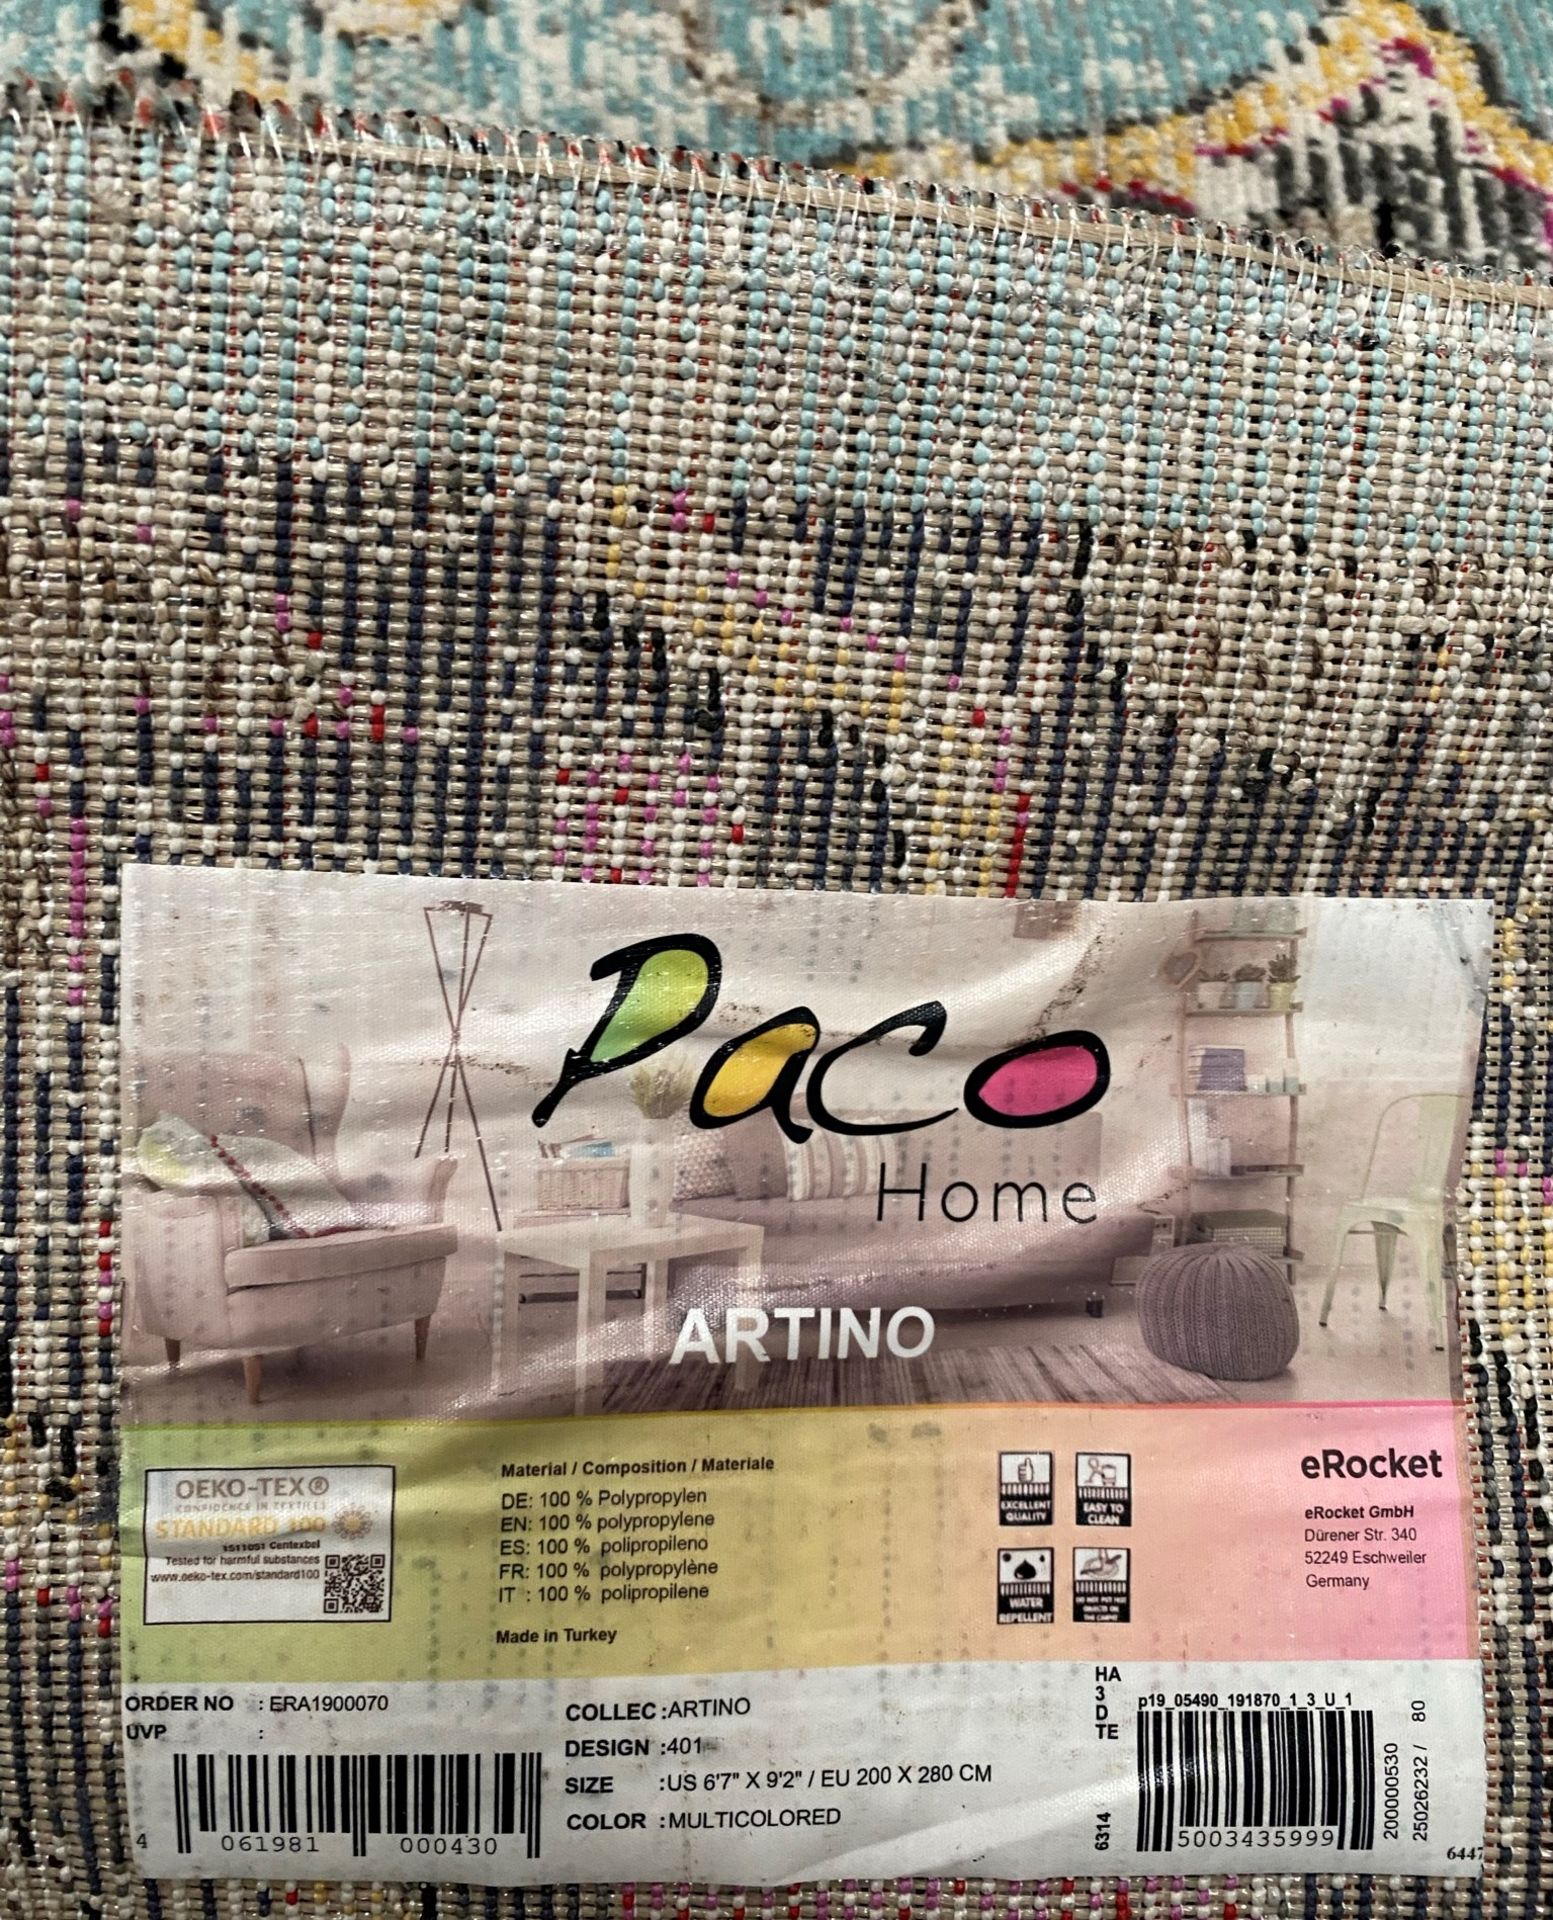 A Paco Home Artino multicoloured rug - 200 x 280cm - Image 2 of 2